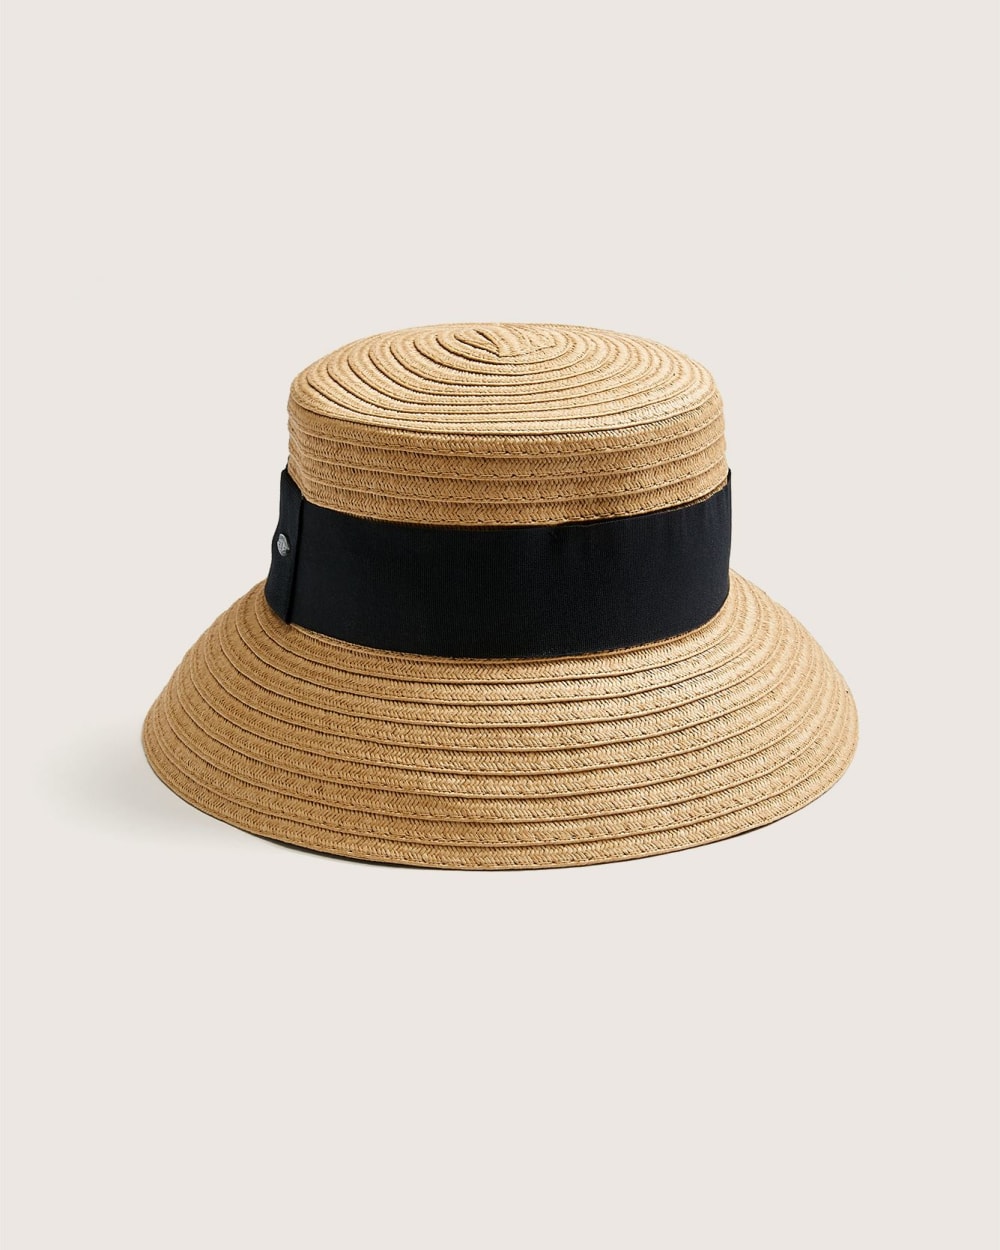 Straw Cloche Hat - Canadian Hat